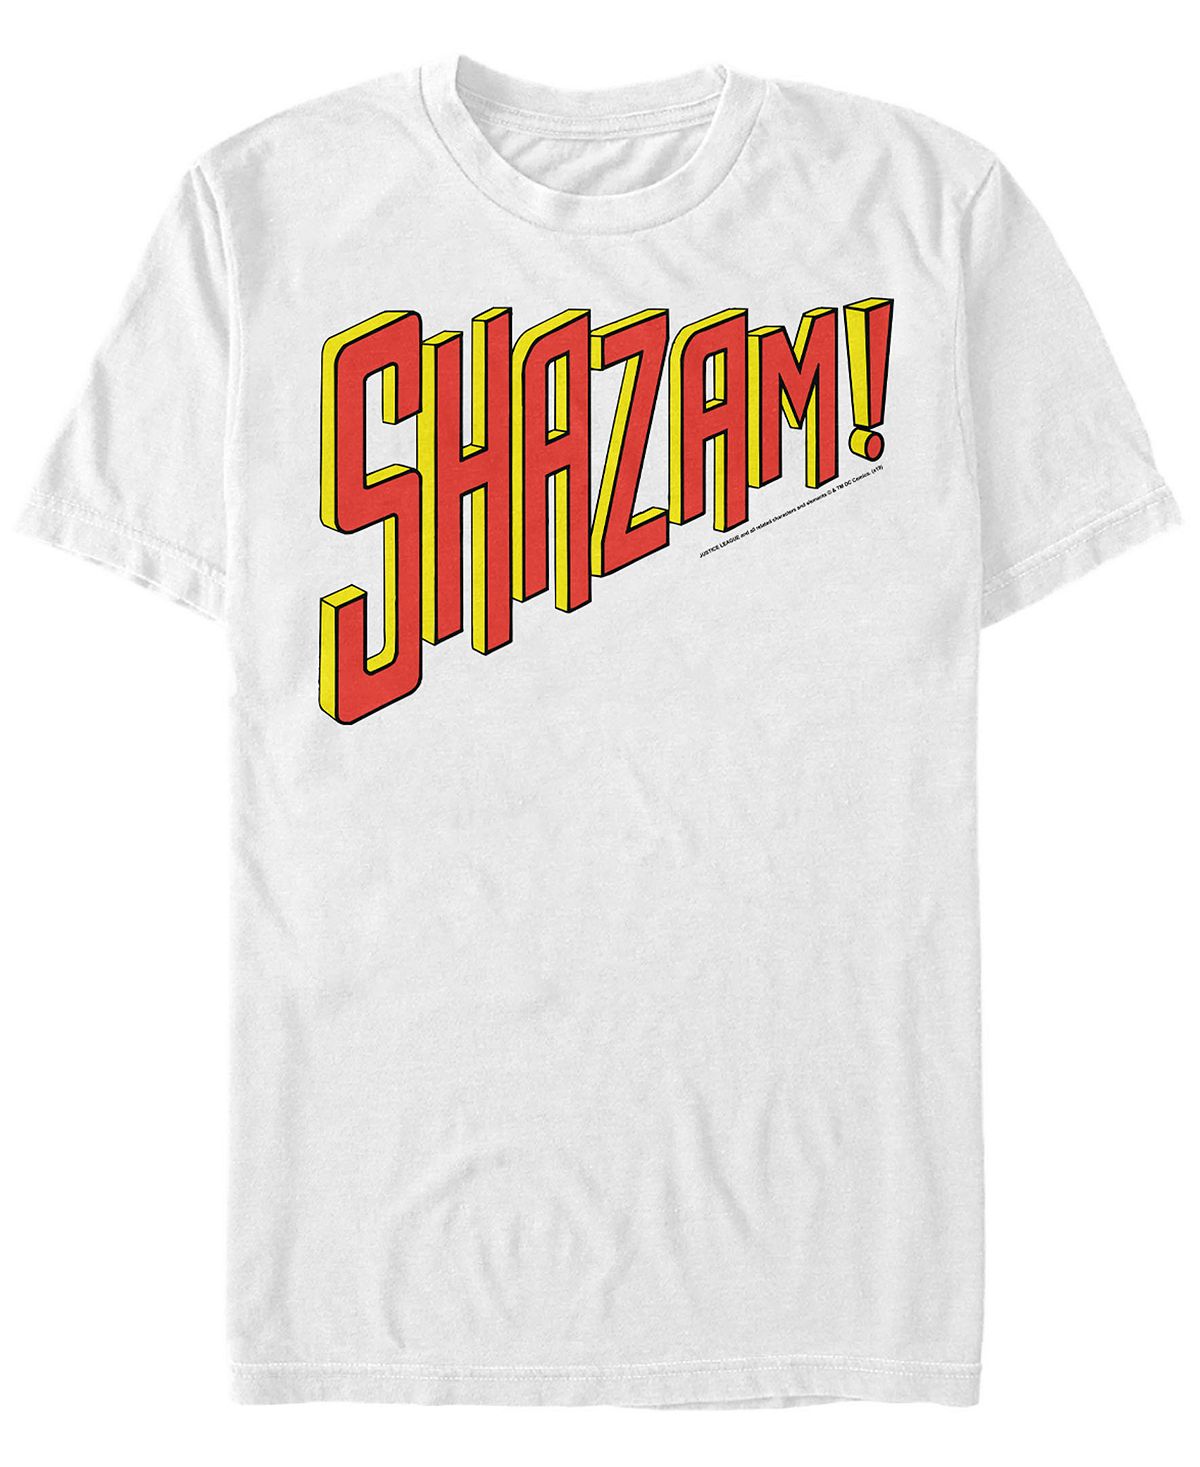 Мужская футболка с коротким рукавом и логотипом shazam от dc dc Fifth Sun, белый цена и фото